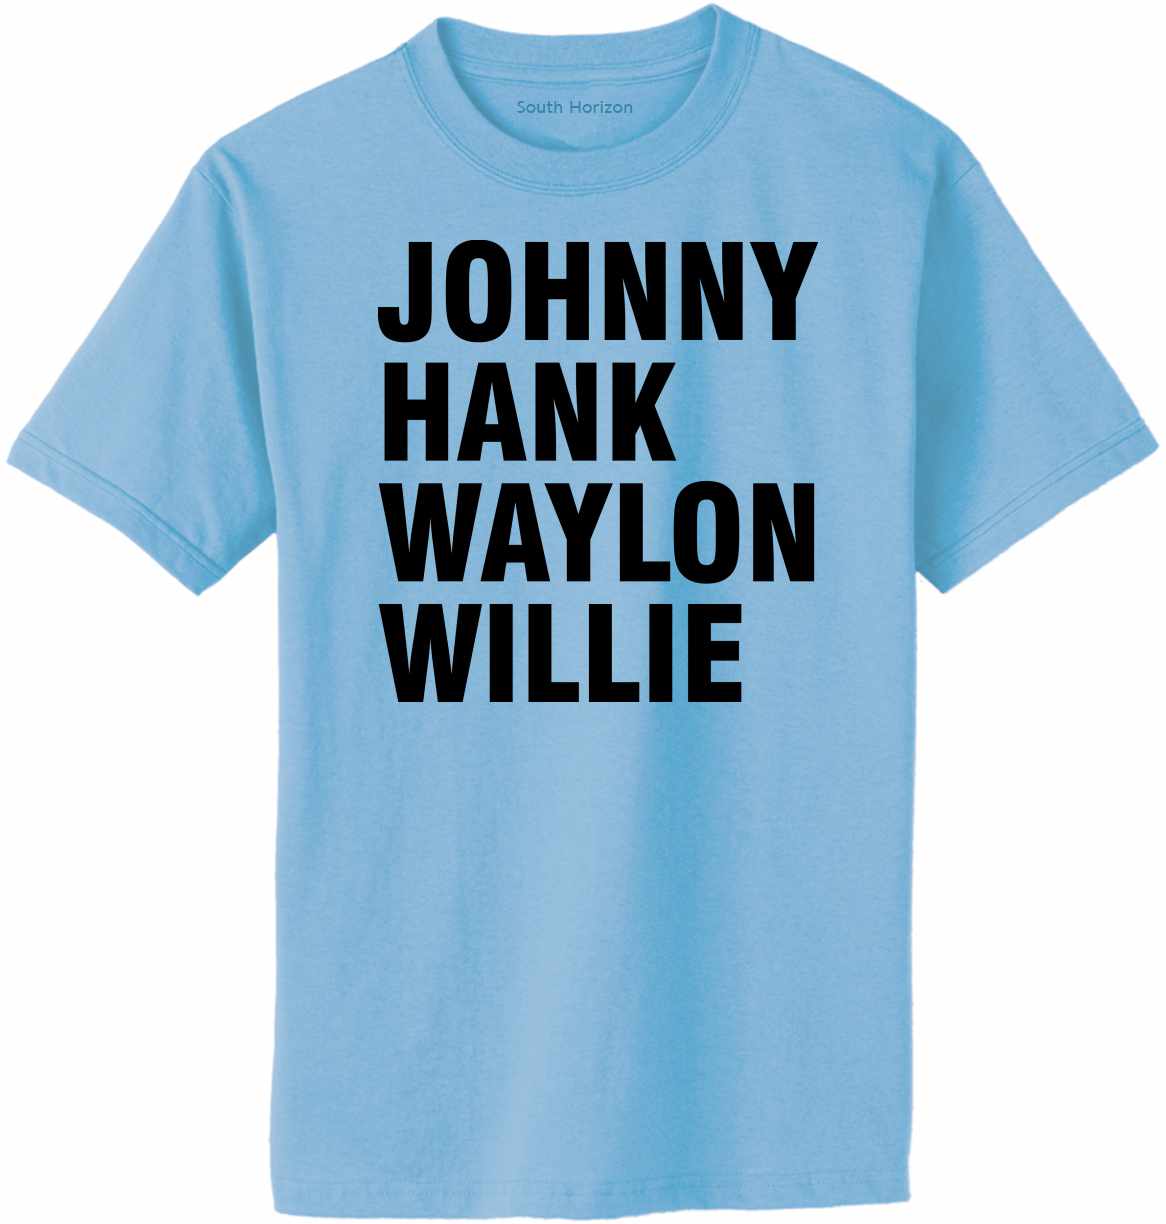 JOHNNY HANK WAYLON WILLIE on Adult T-Shirt